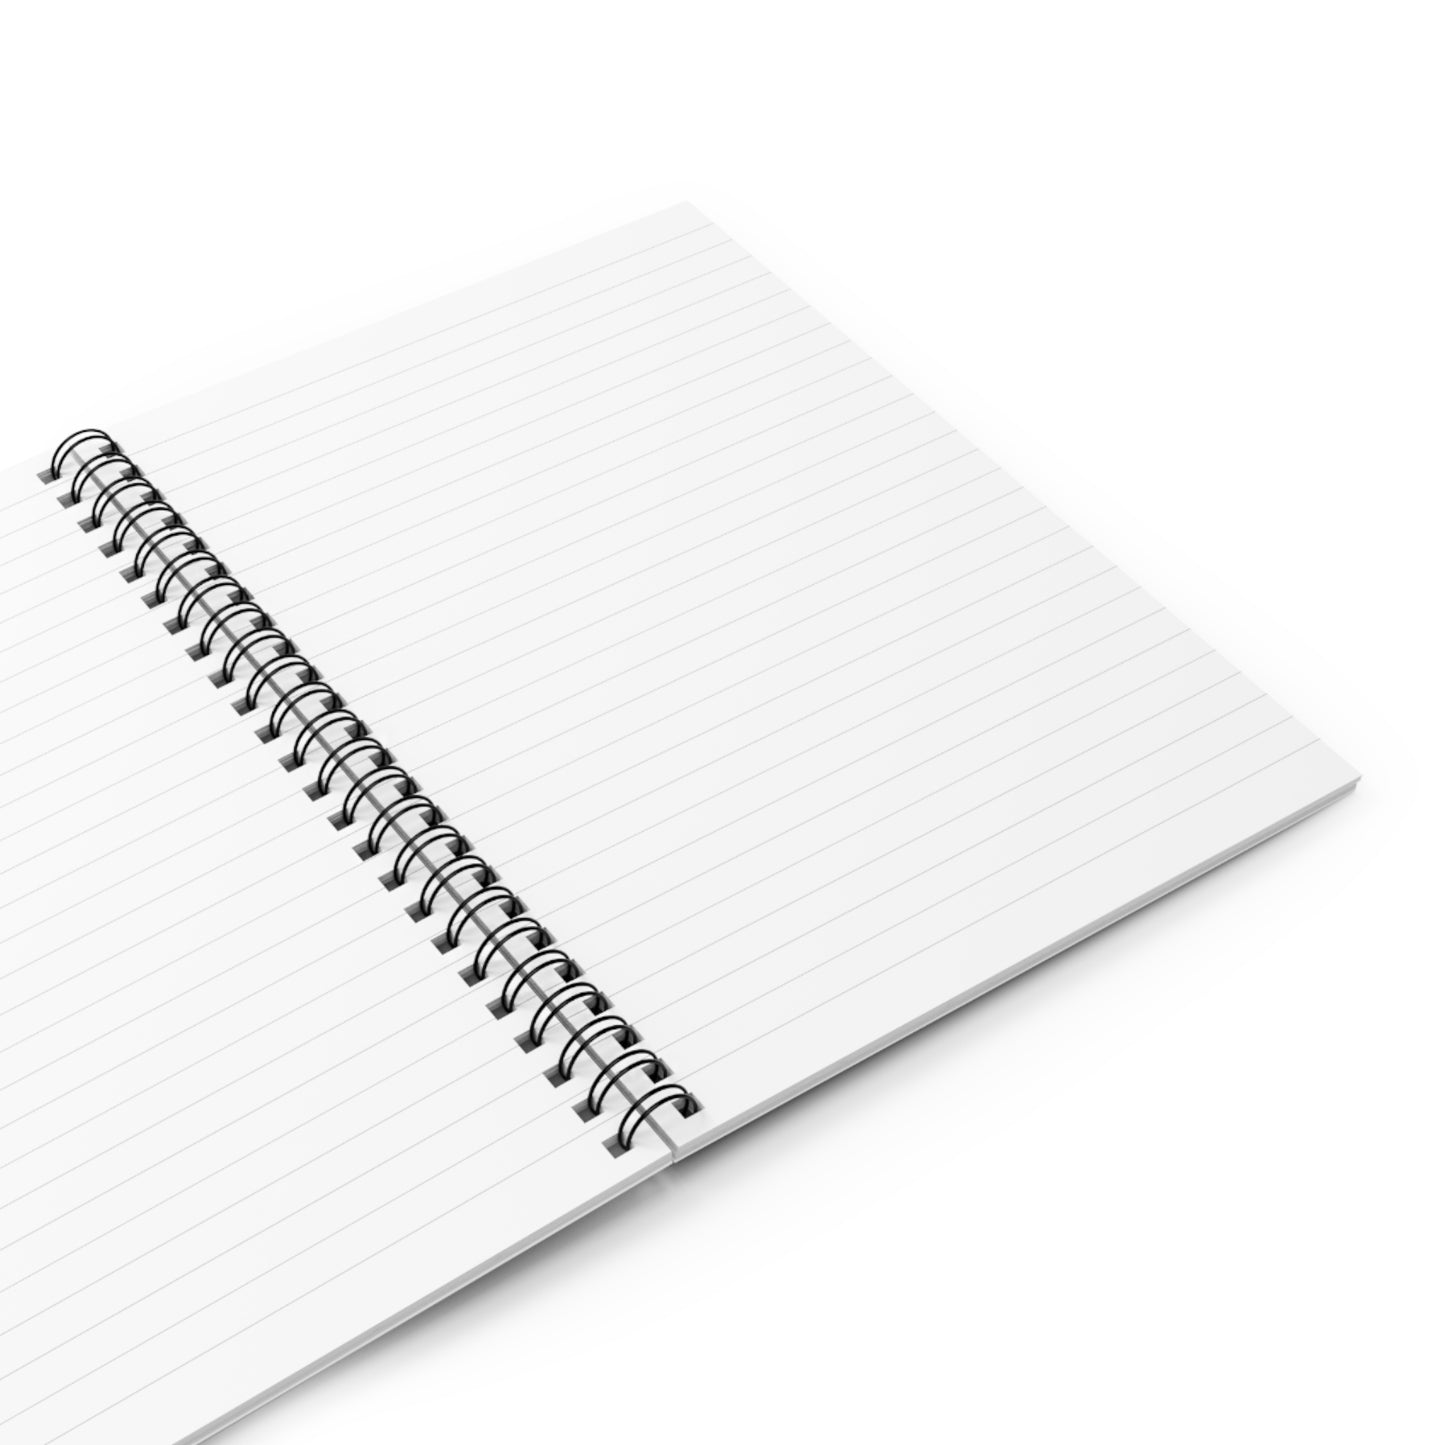 Cheatsheet Notebook - Markdown